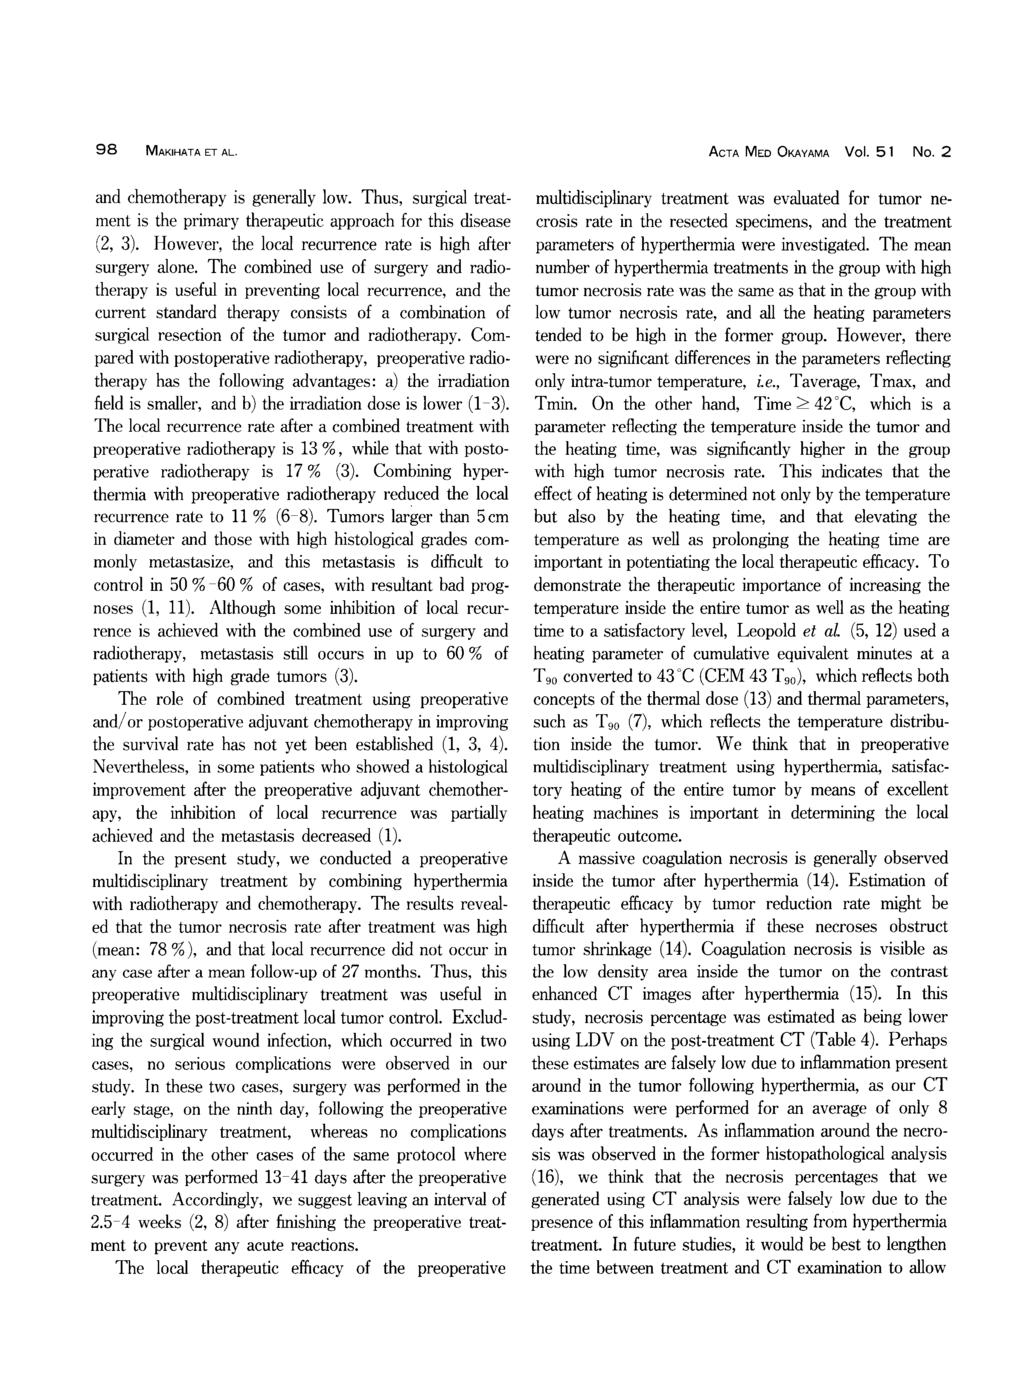 Acta Medica Okayama, Vol. 51 [1997], Iss. 2, Art.